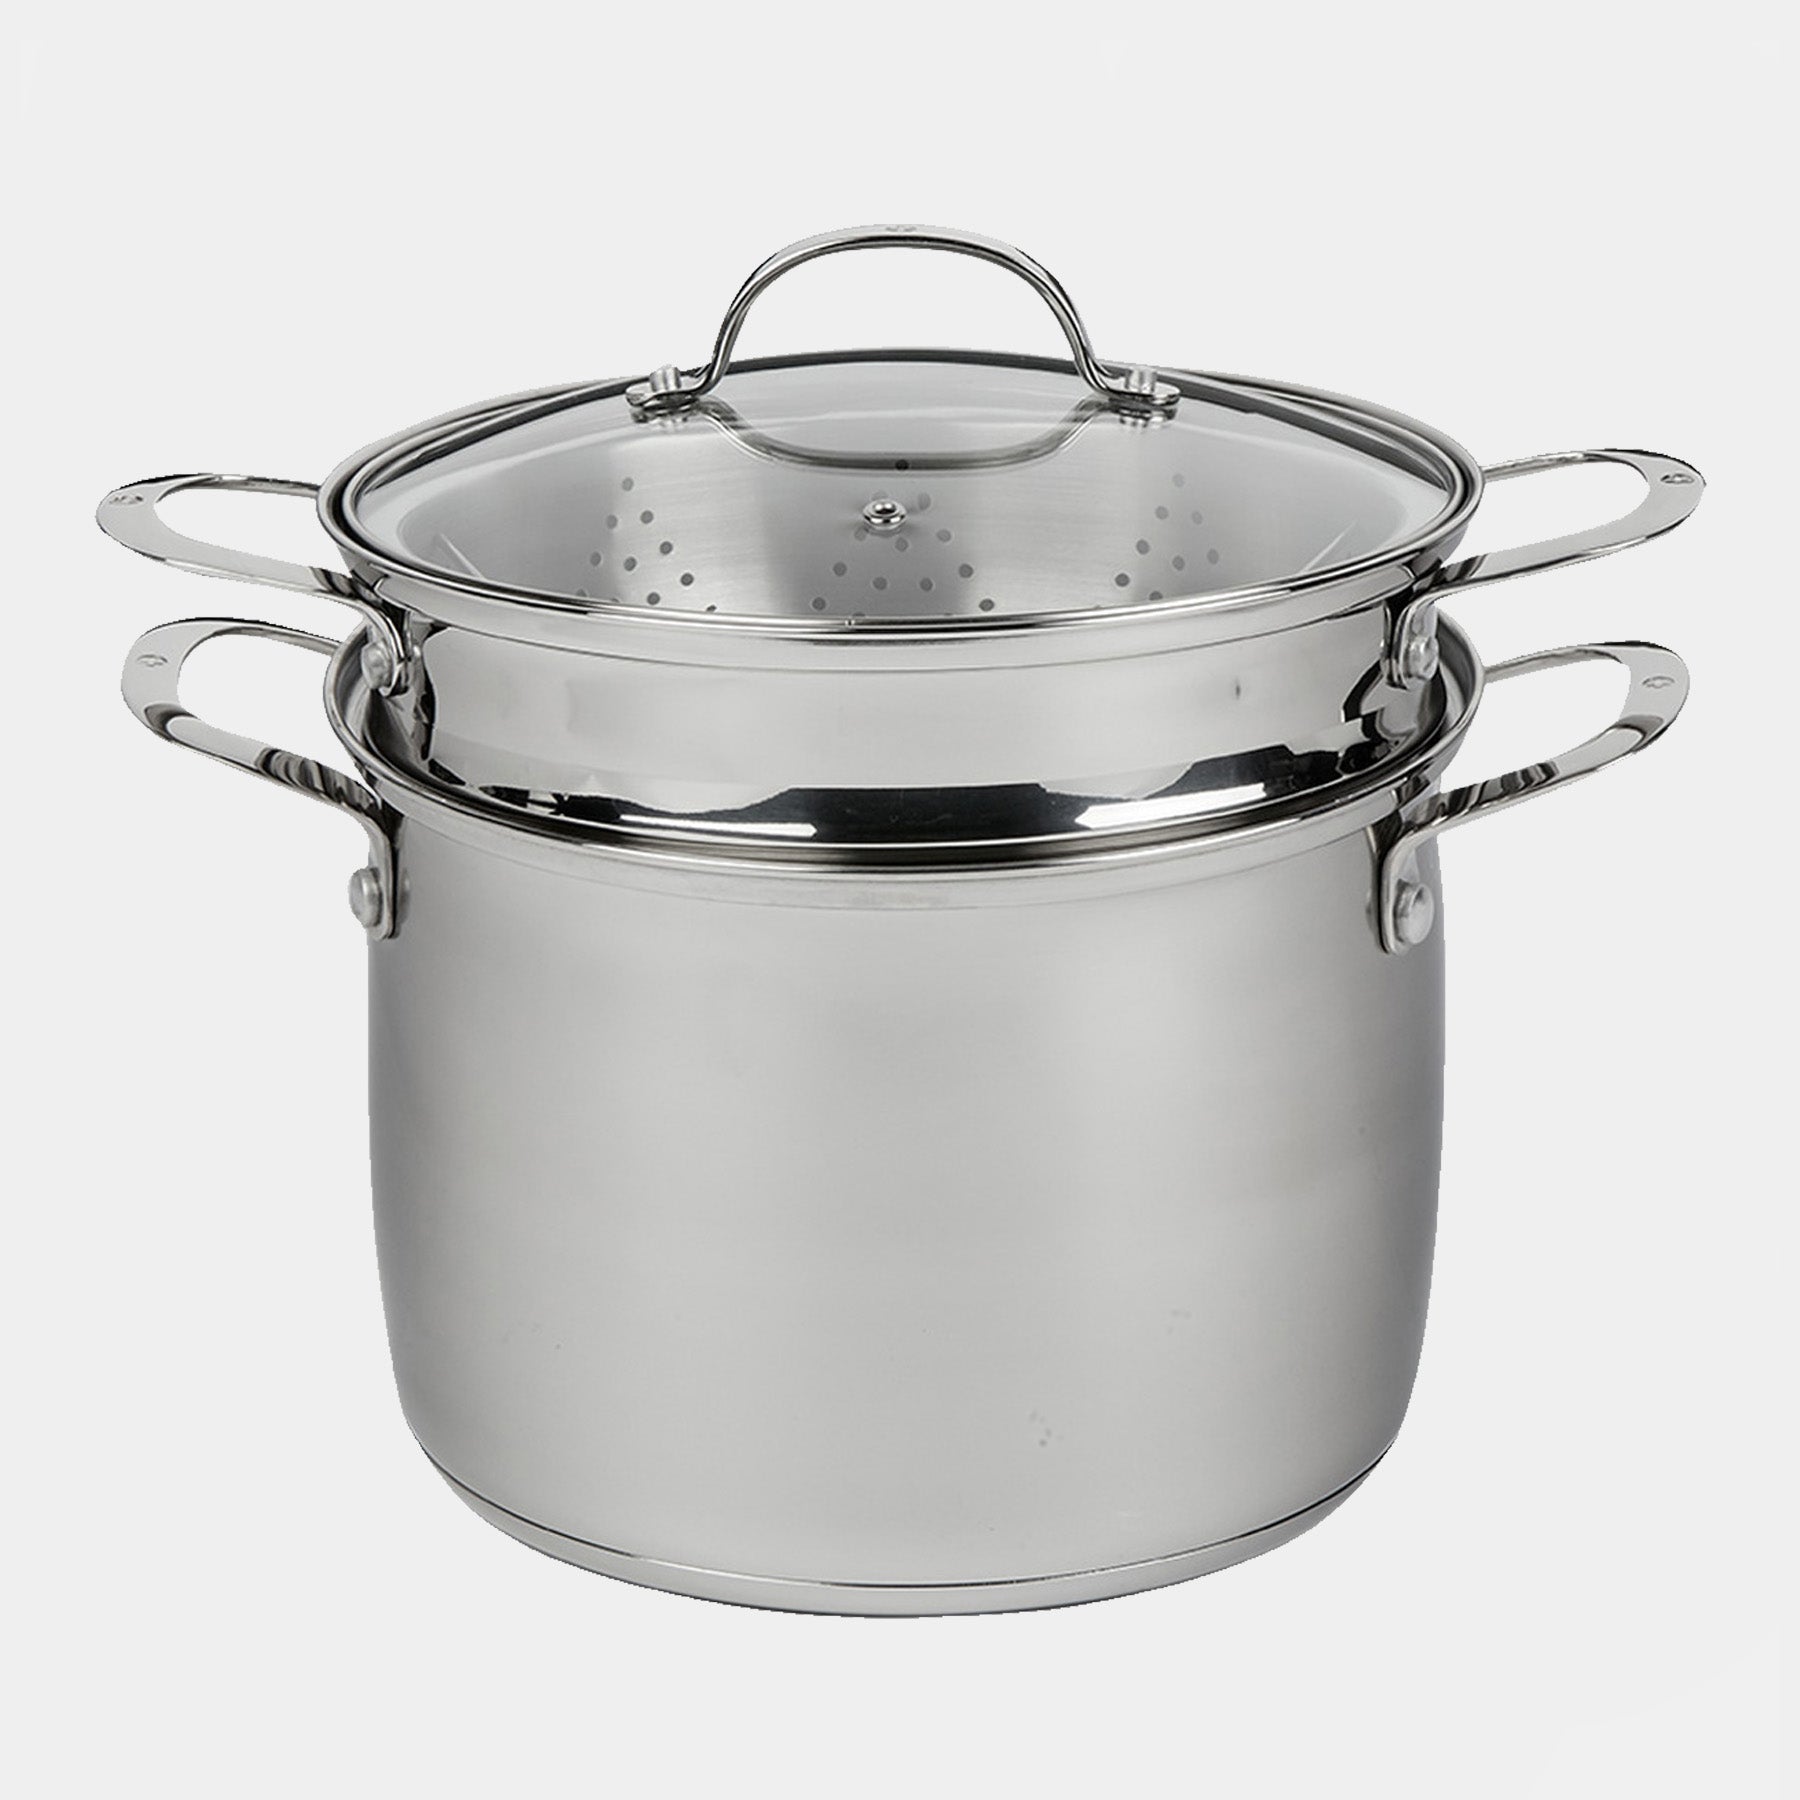 Premium Steel DLX 7.6 qt Stainless Pasta Pot with Strainer, Steamer Basket & Lid